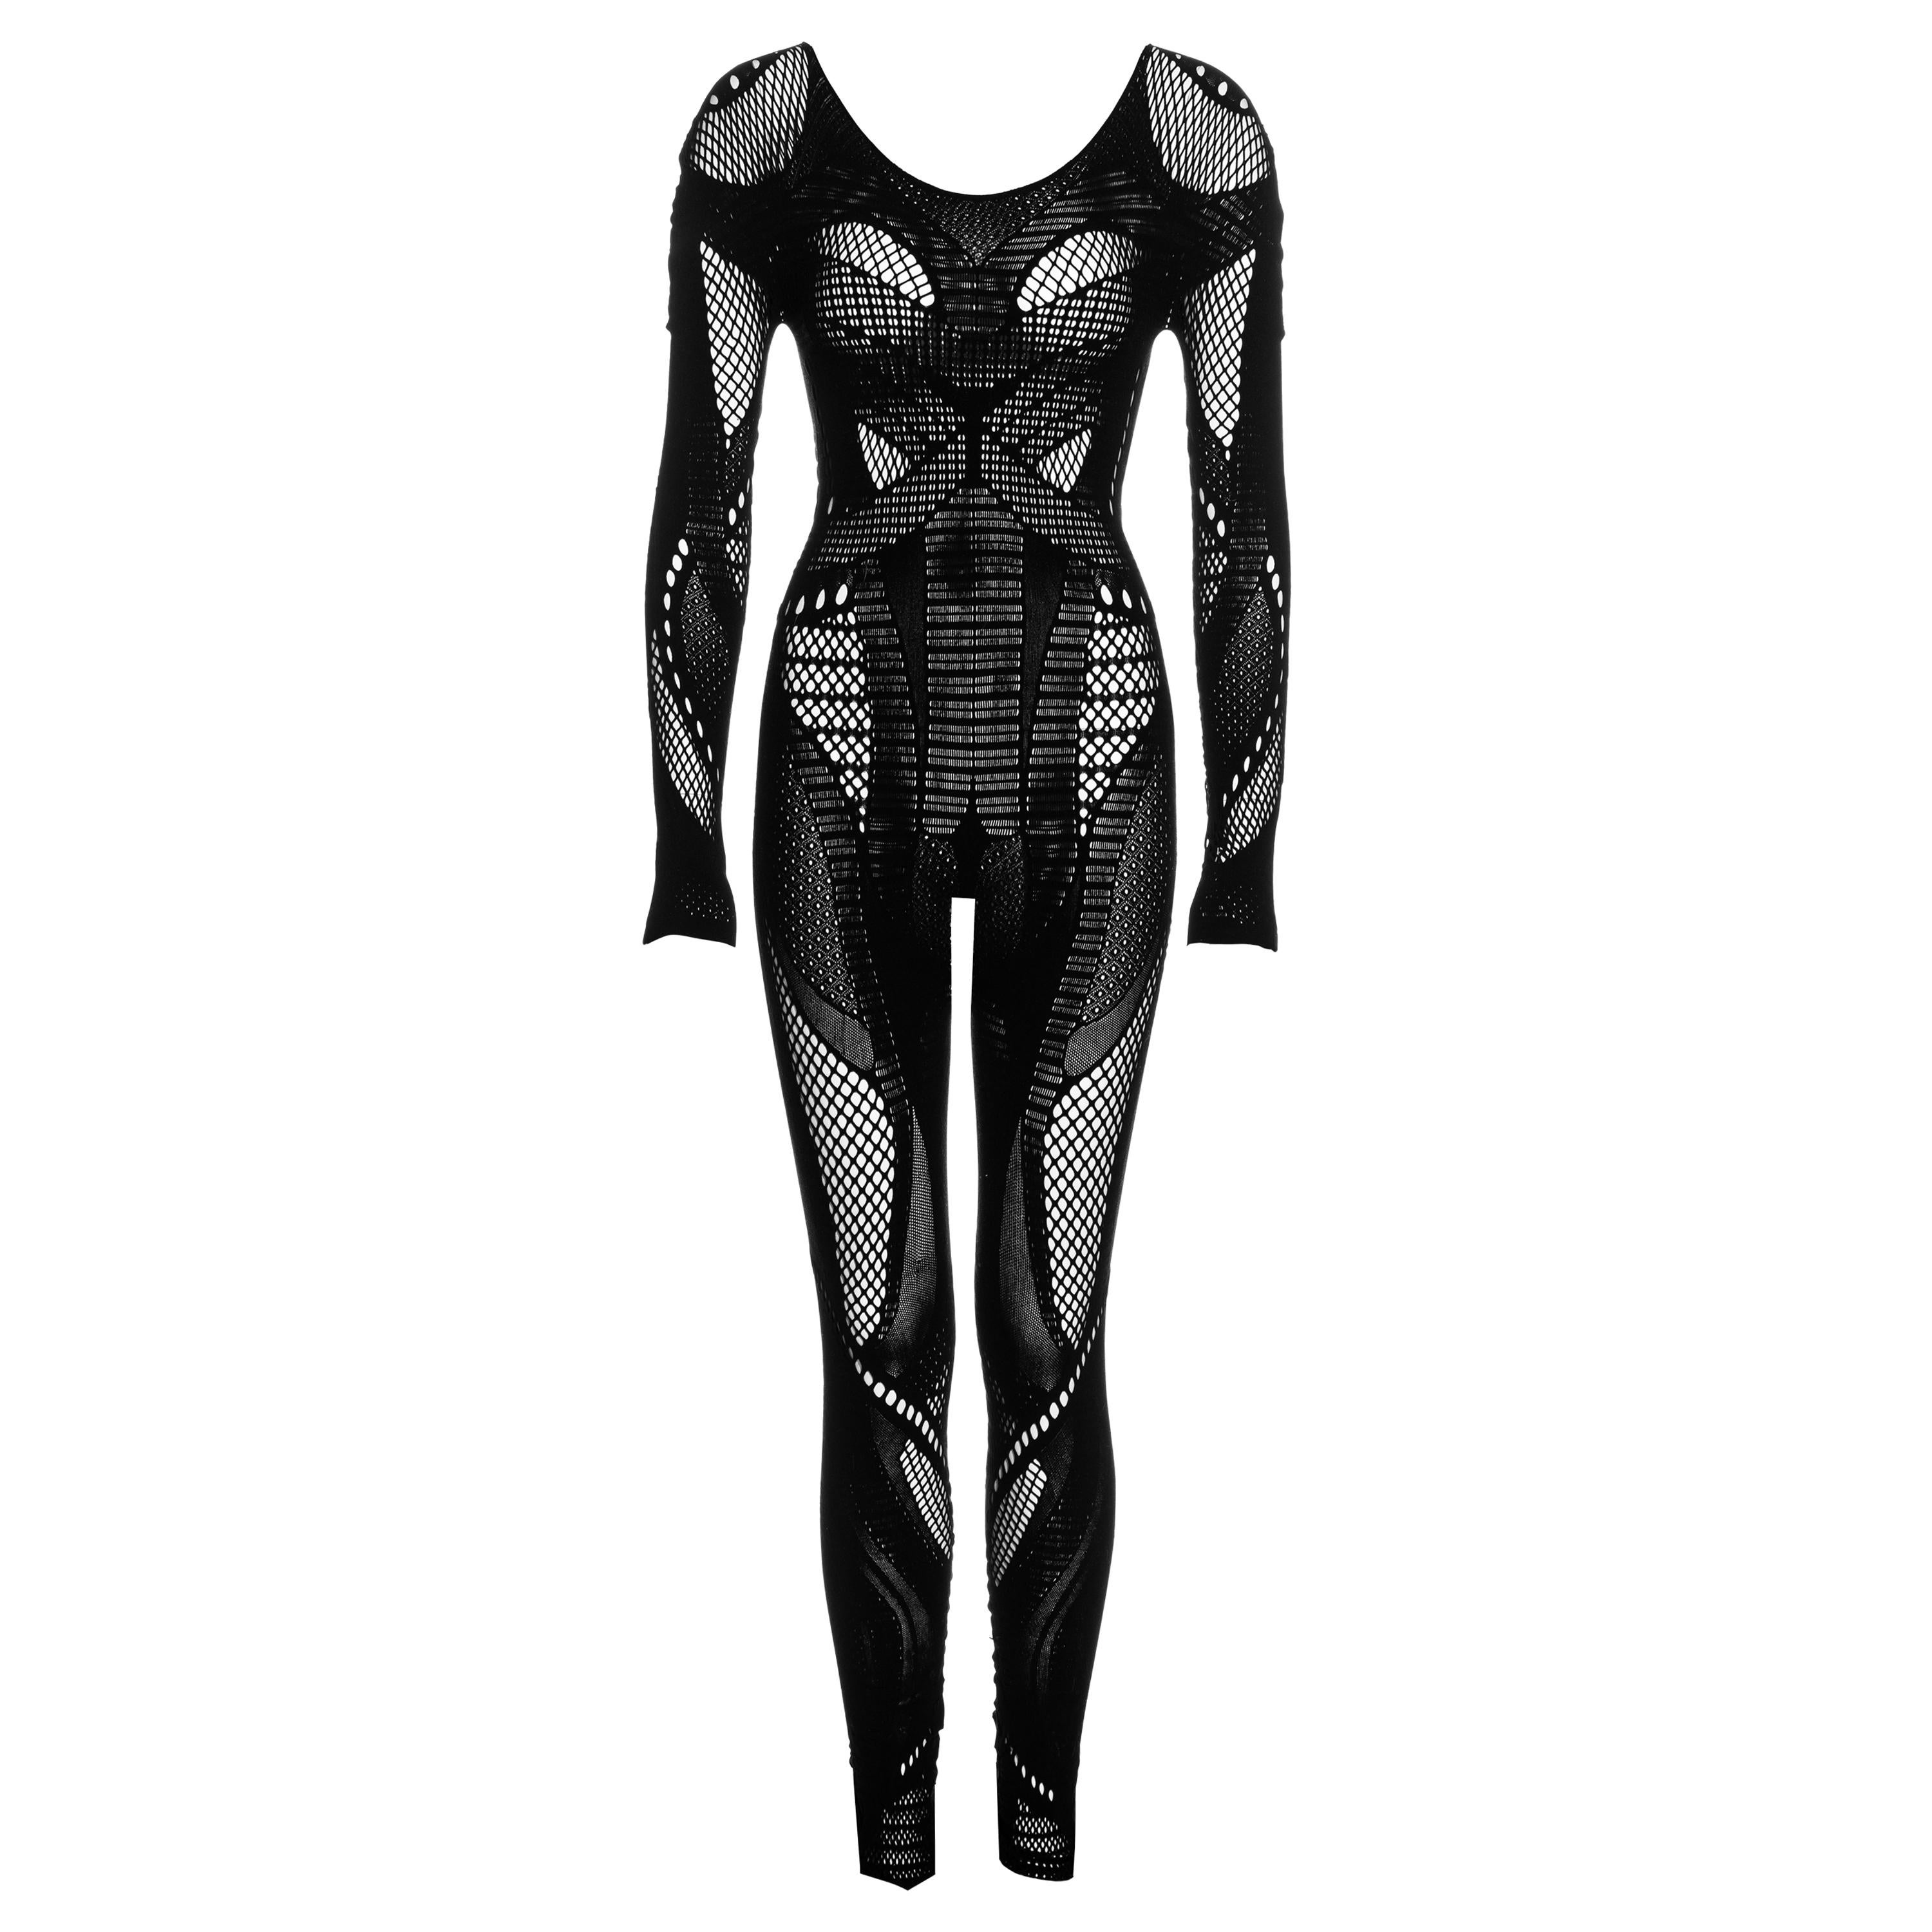 McQ Alexander McQueen black fishnet mesh jumpsuit, fw 2011